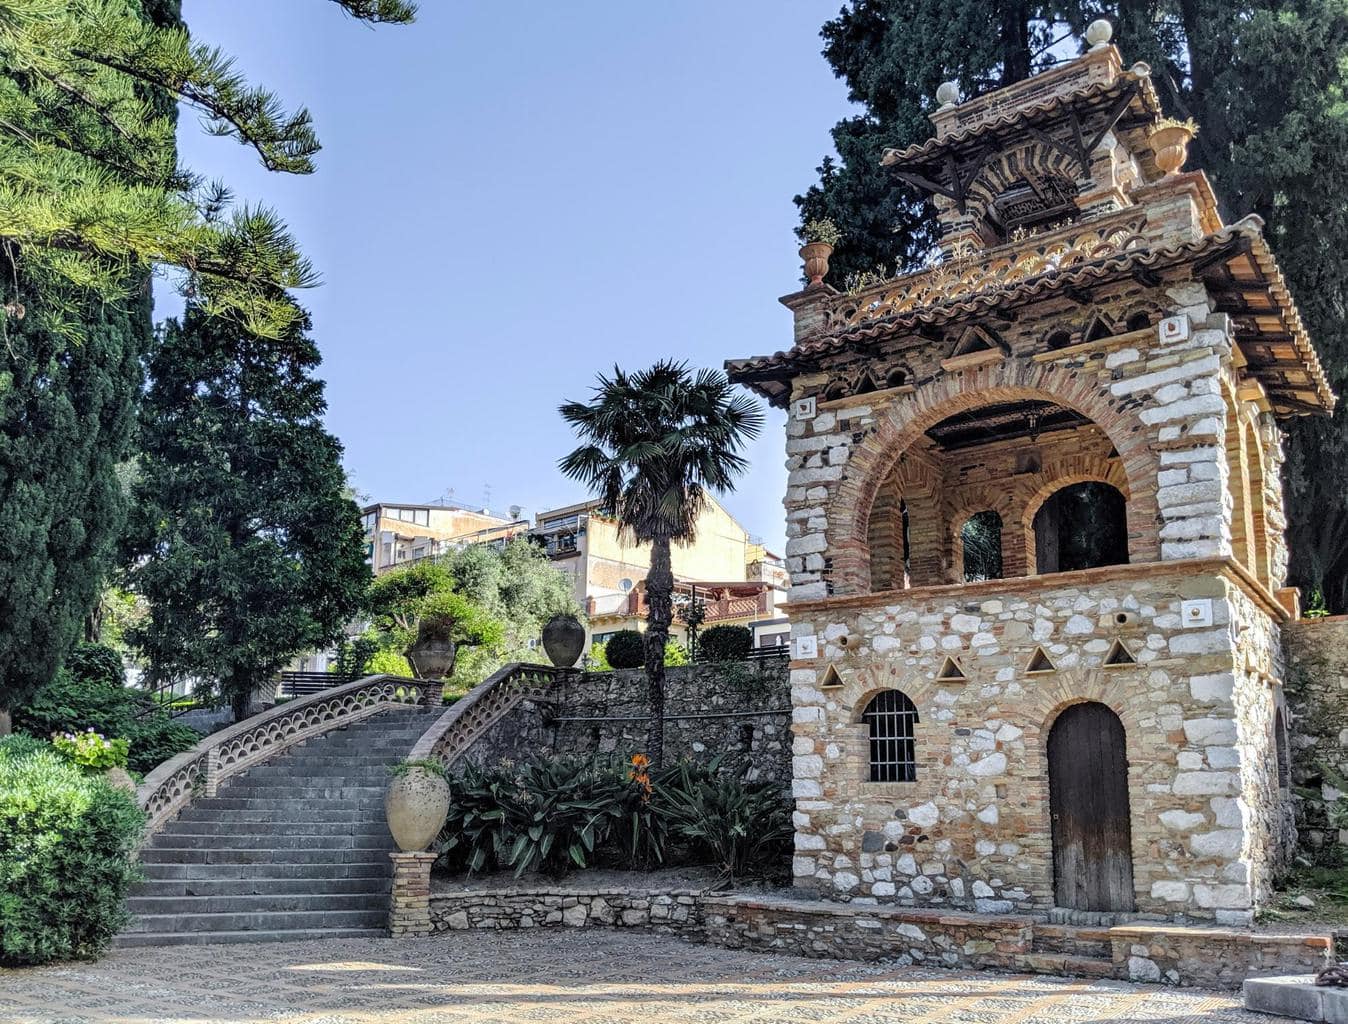 Guide to Taormina - Villa Comunale, Hallington Siculo